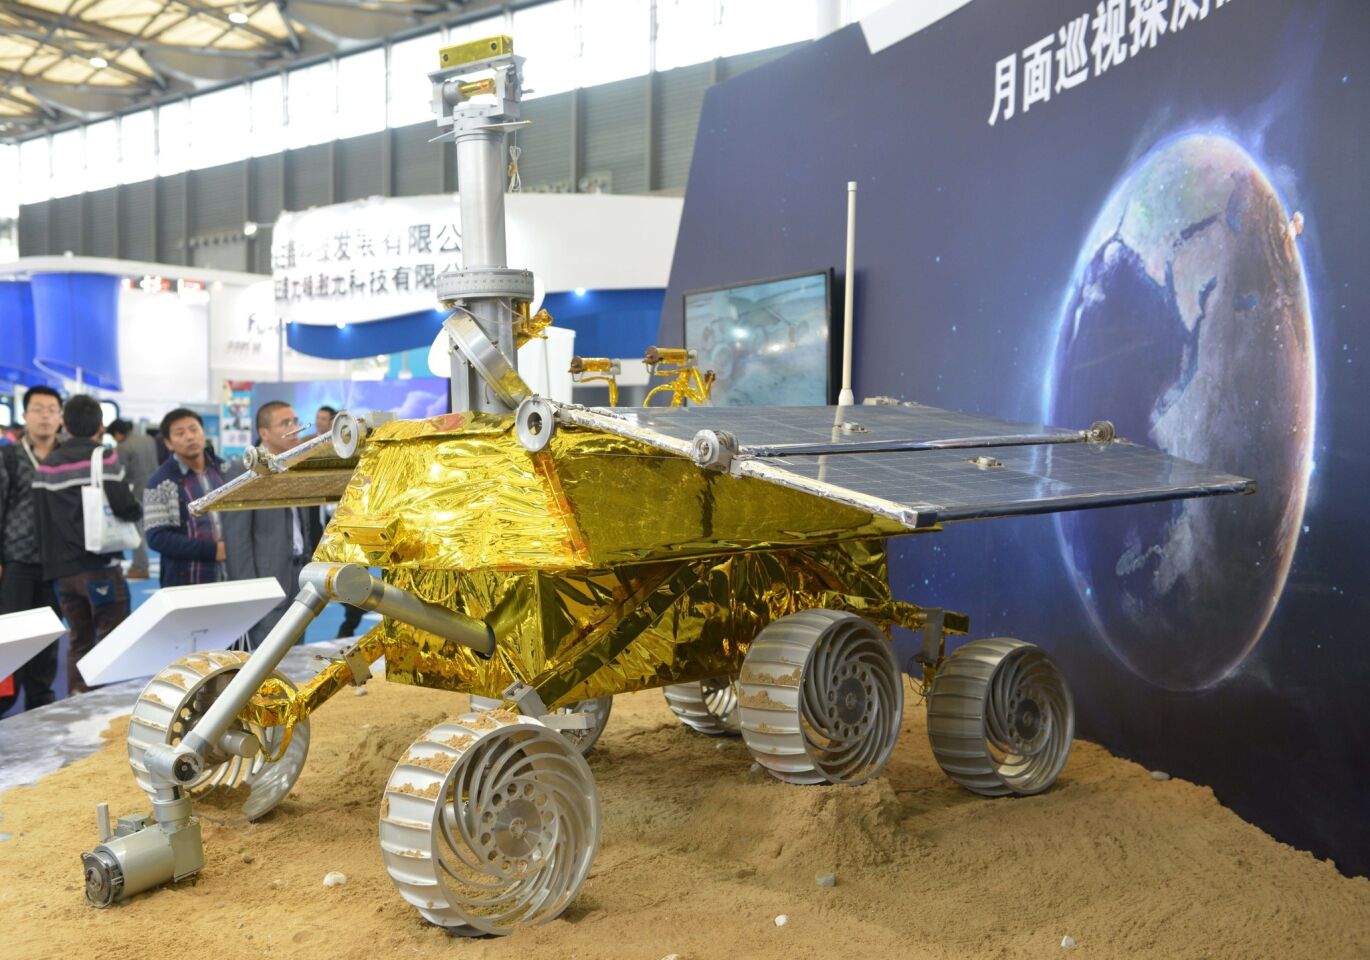 China Yutu rover model